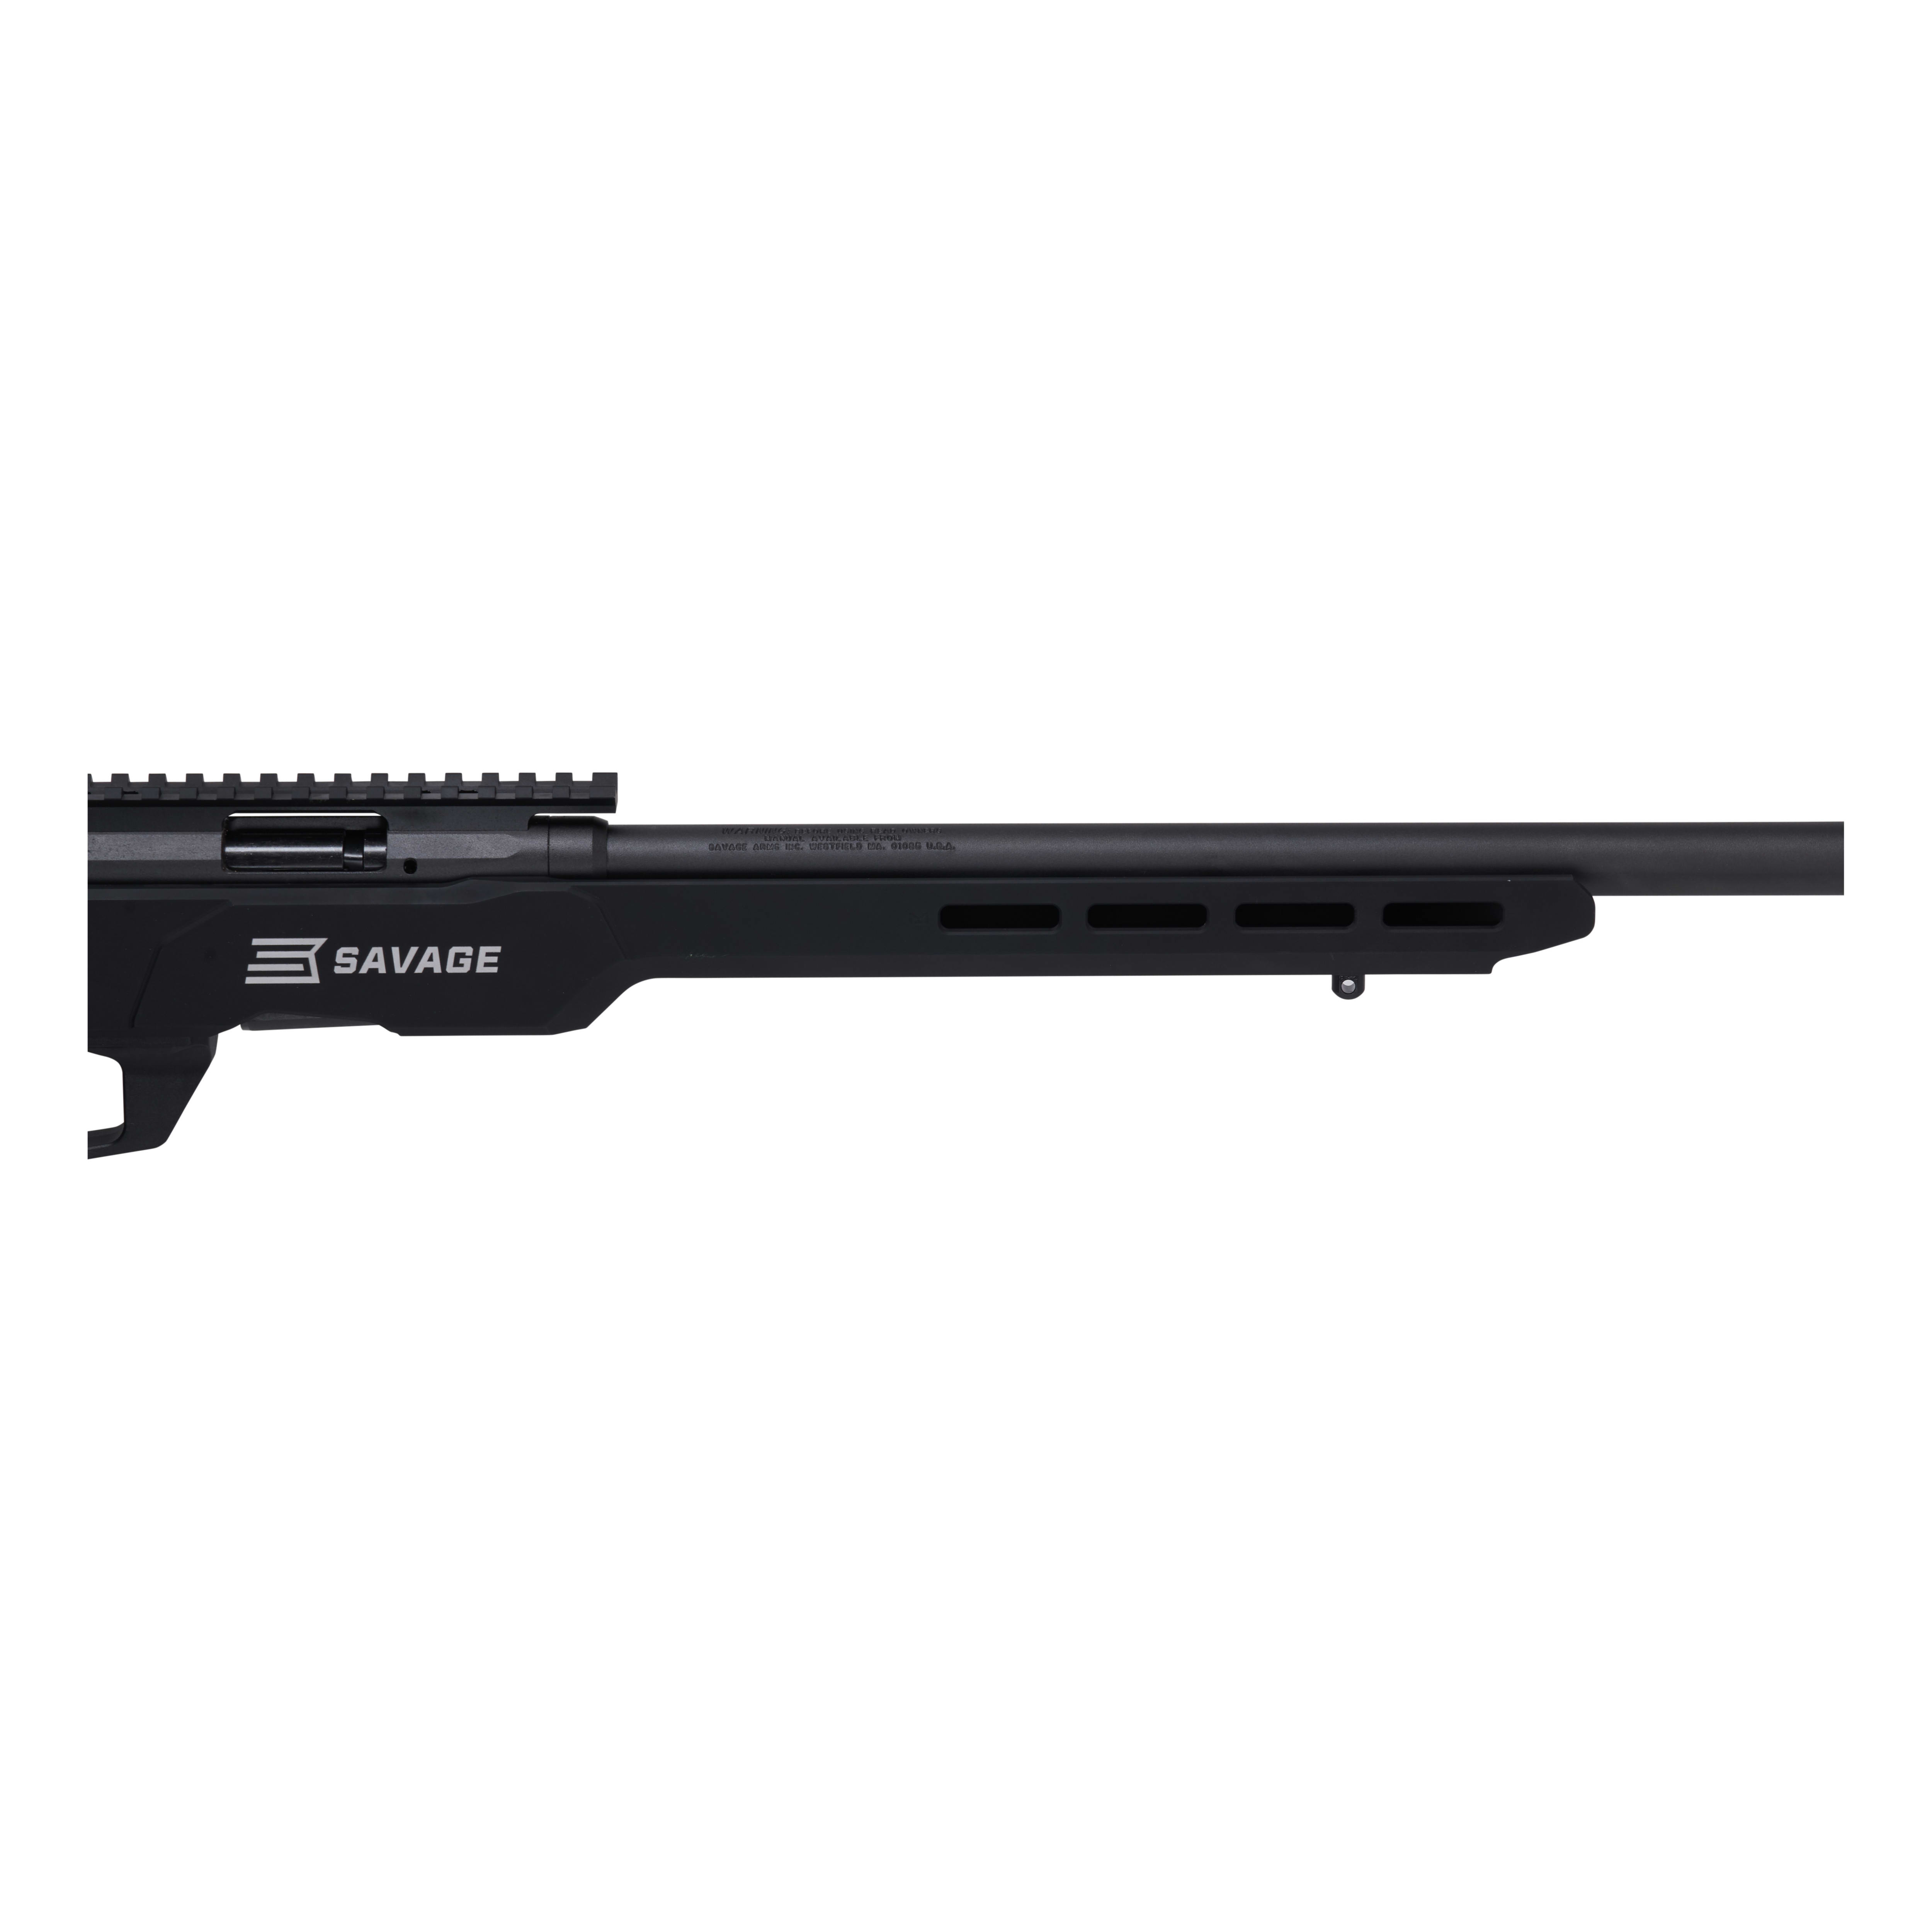 Savage® B Series Precision Semi-Automatic Rifles - Forend View